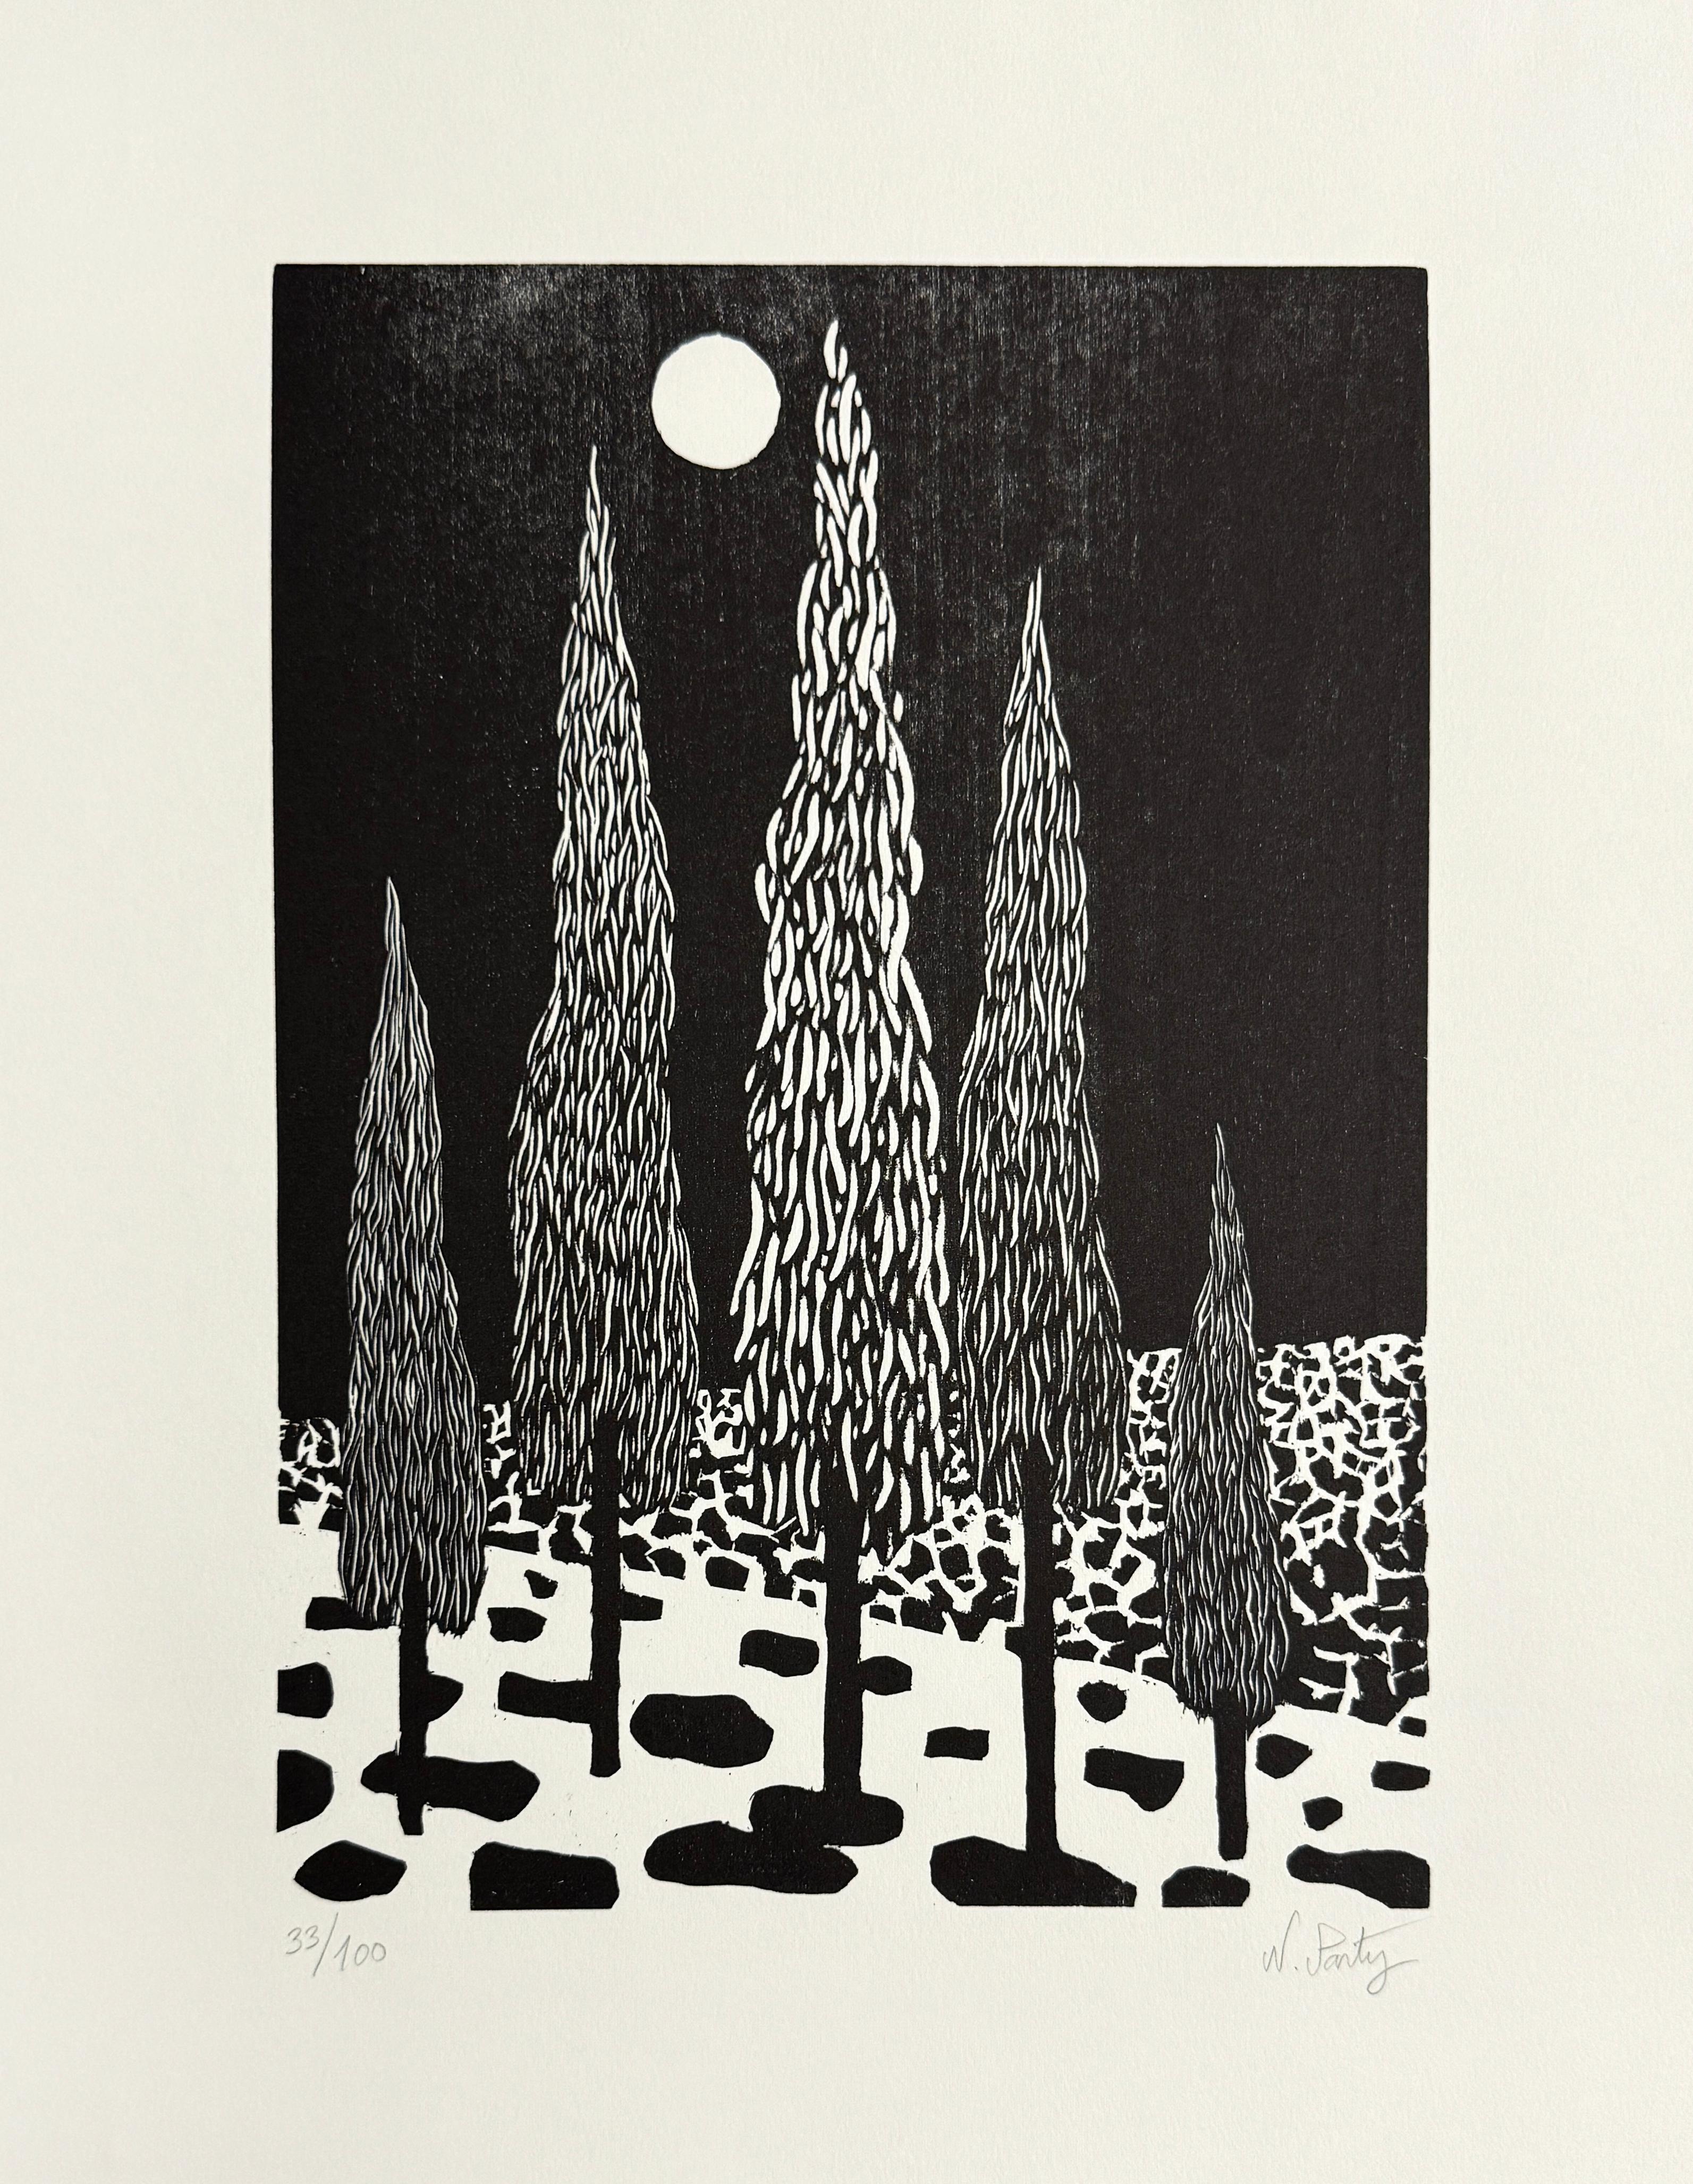 Nicolas Party Landscape Print - Trees